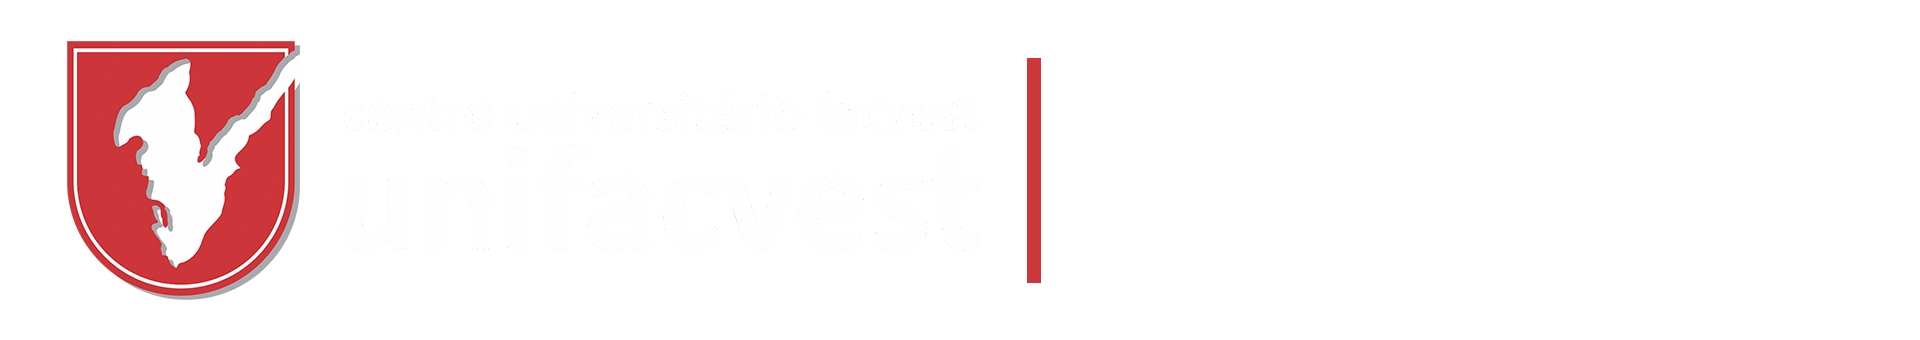 Unifacvest Ed Tech